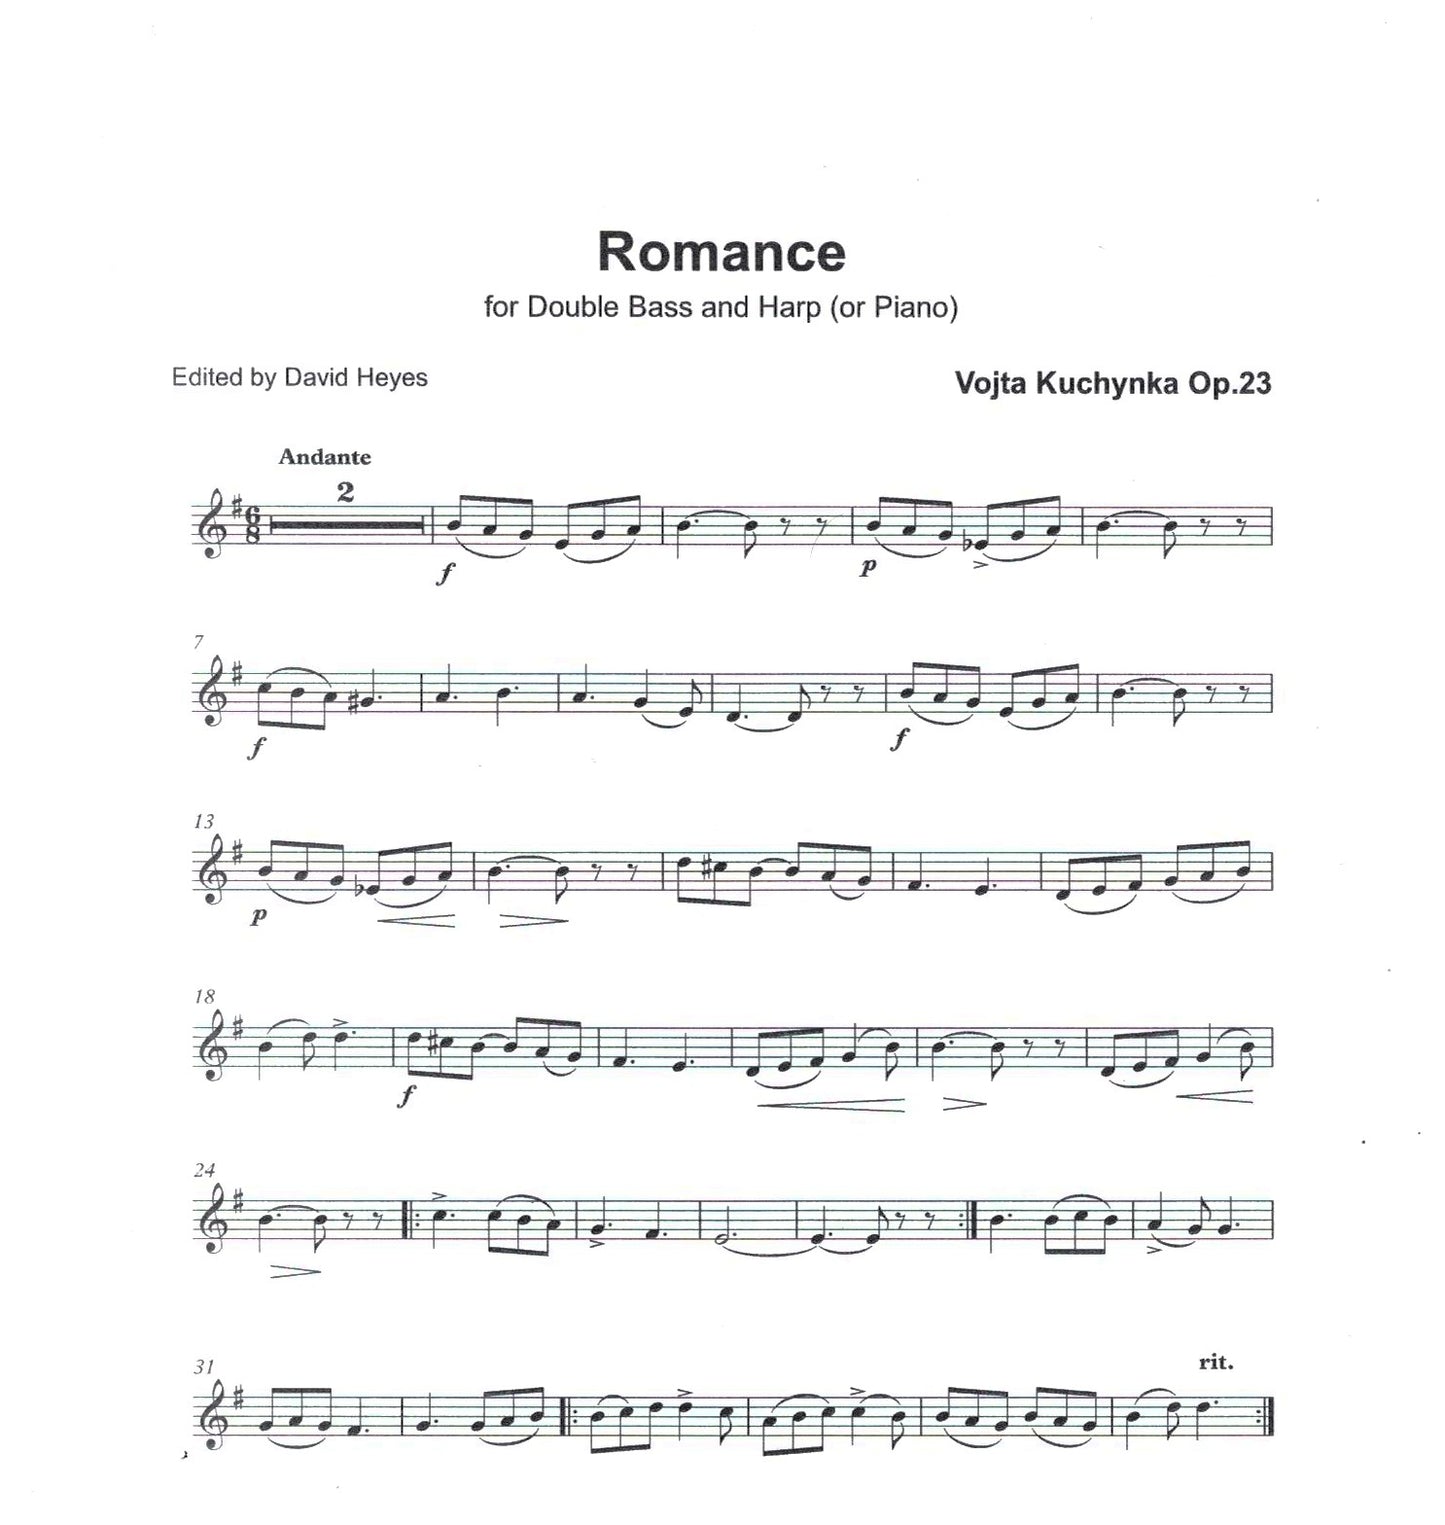 Vojta Kuchynka: Romance for double bass & harp or piano (edited by David Heyes)